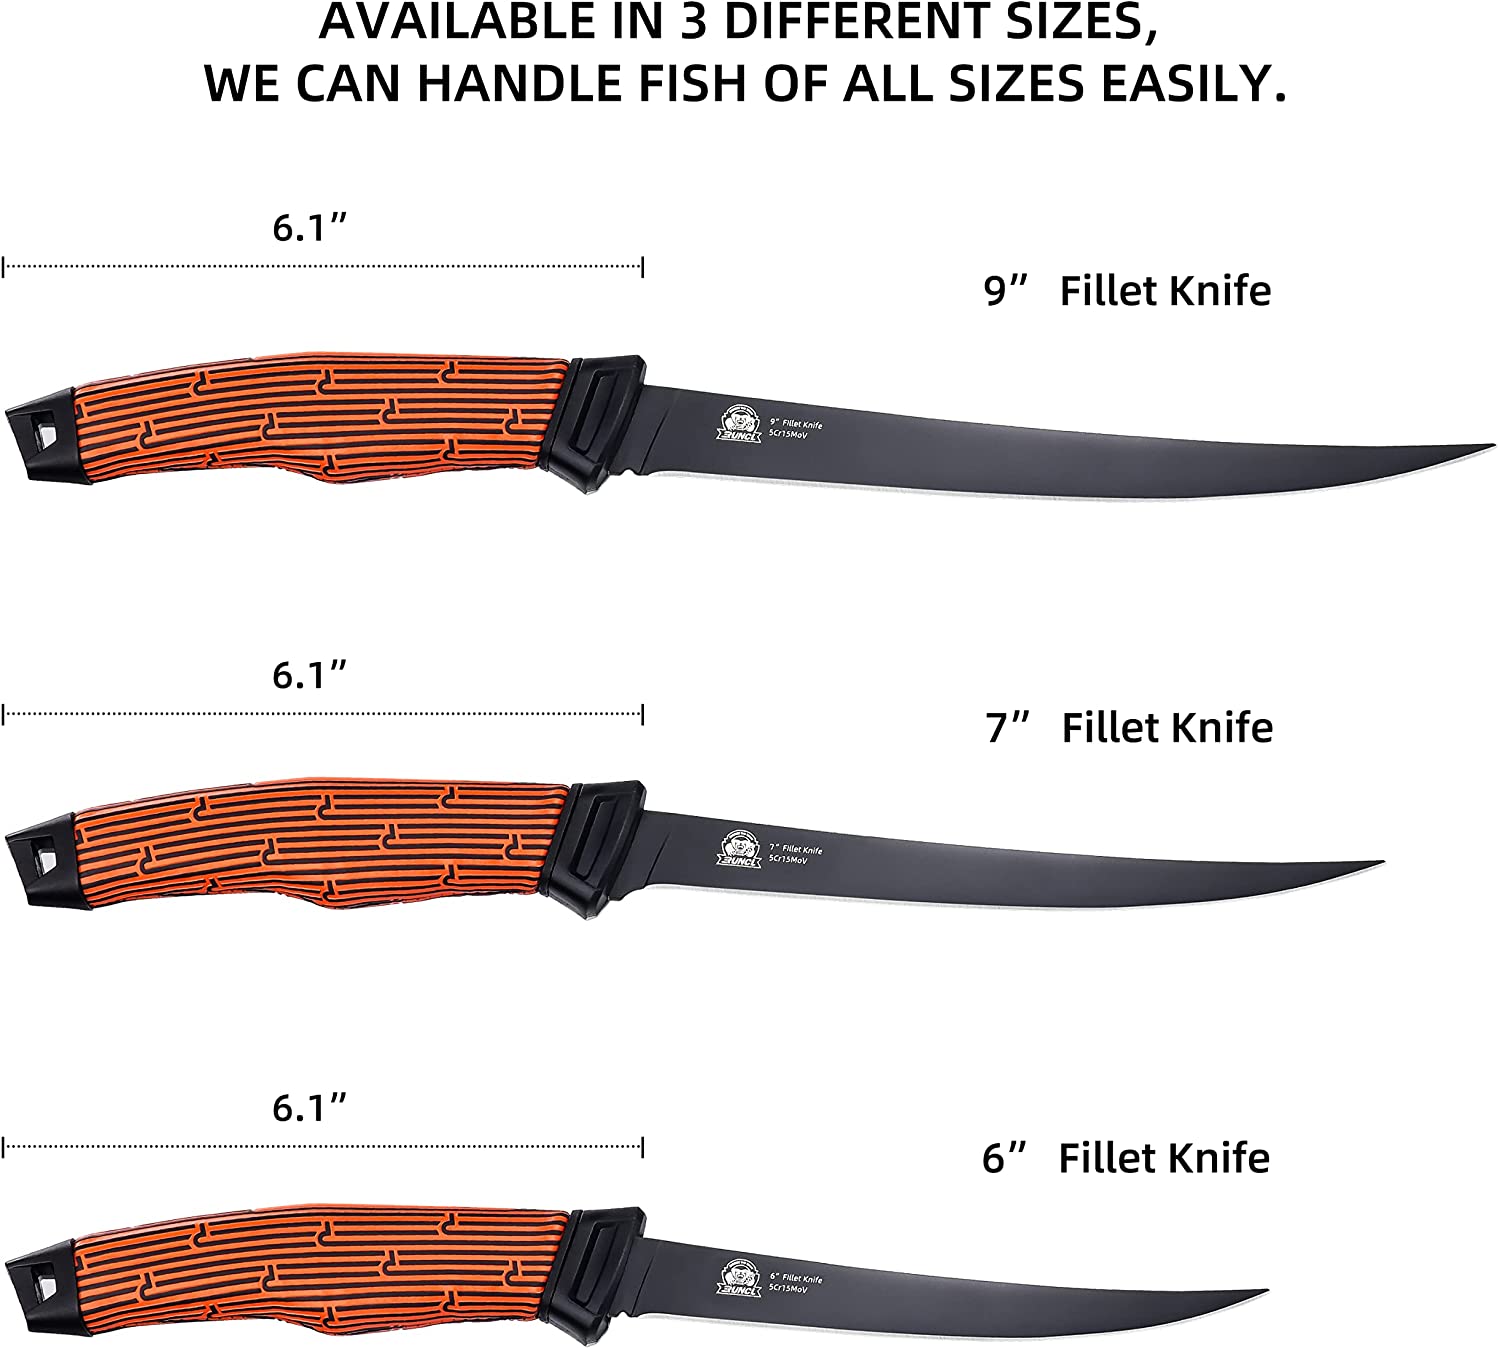 Wholesale fillet knife fishing are Useful Kitchen Utensils